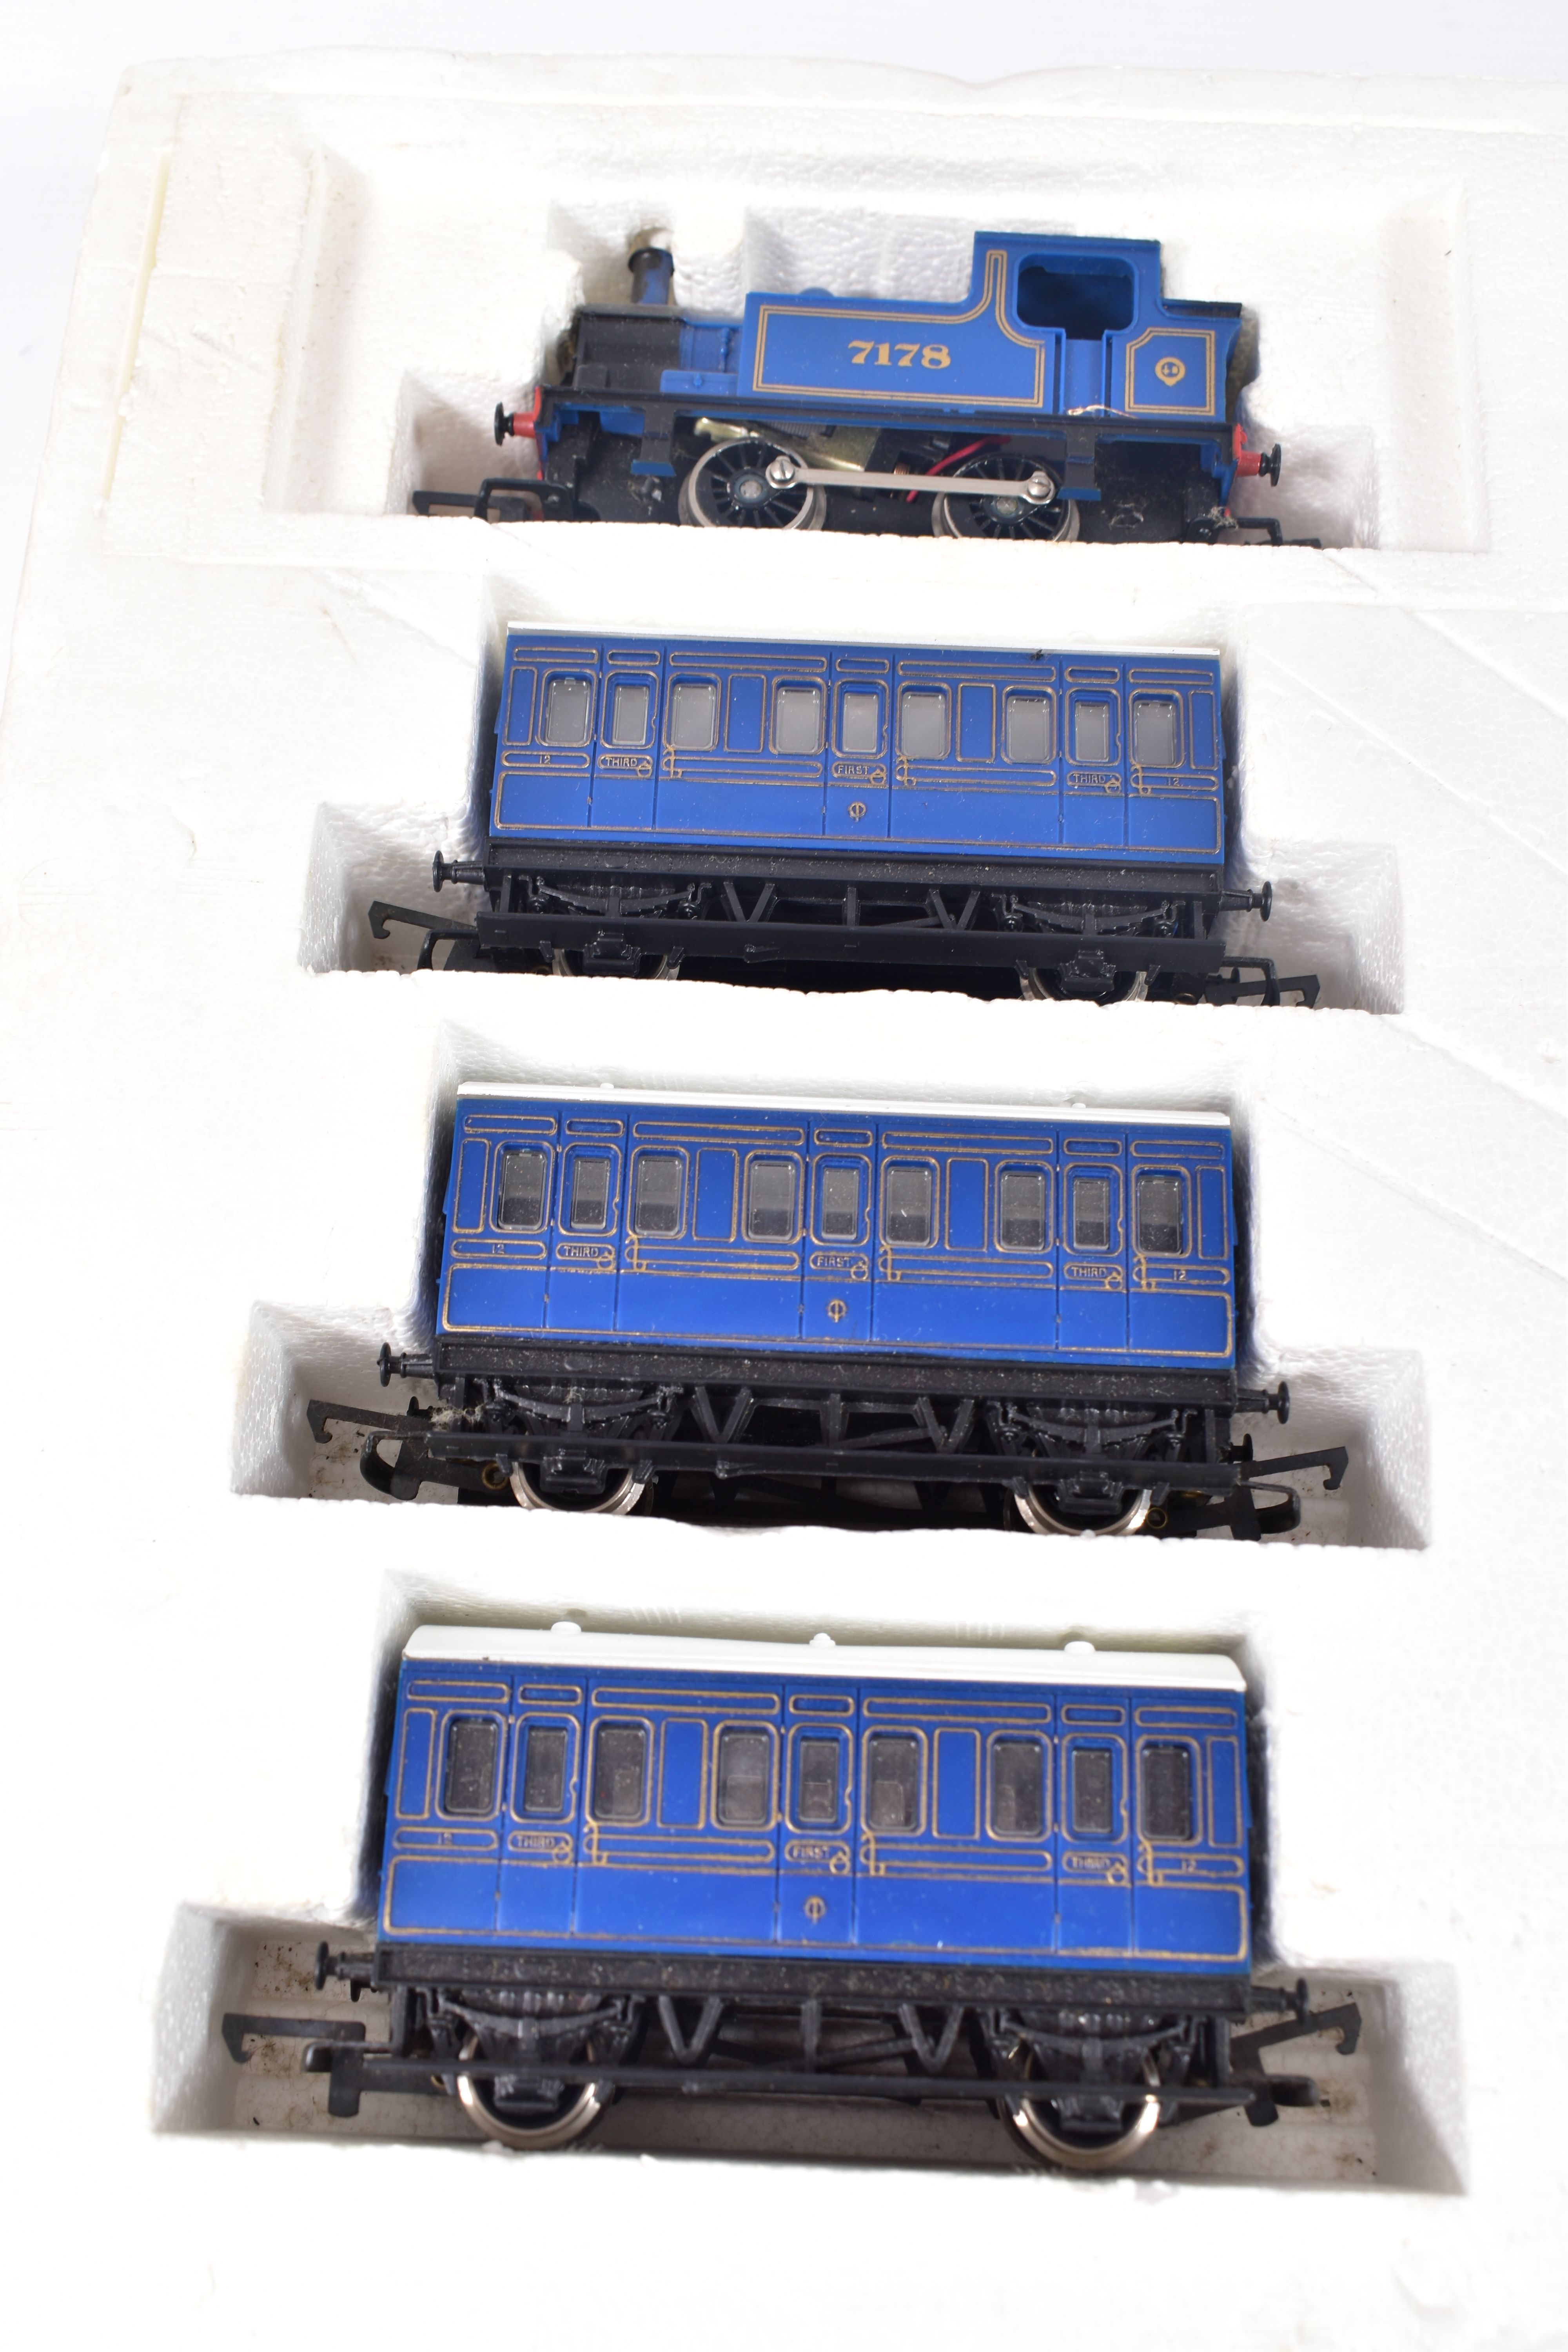 A BOXED HORNBY RAILWAYS OO GAUGE RURAL RAMBLER TRAIN SET, No.R174, comprising freelance industrial - Image 7 of 7